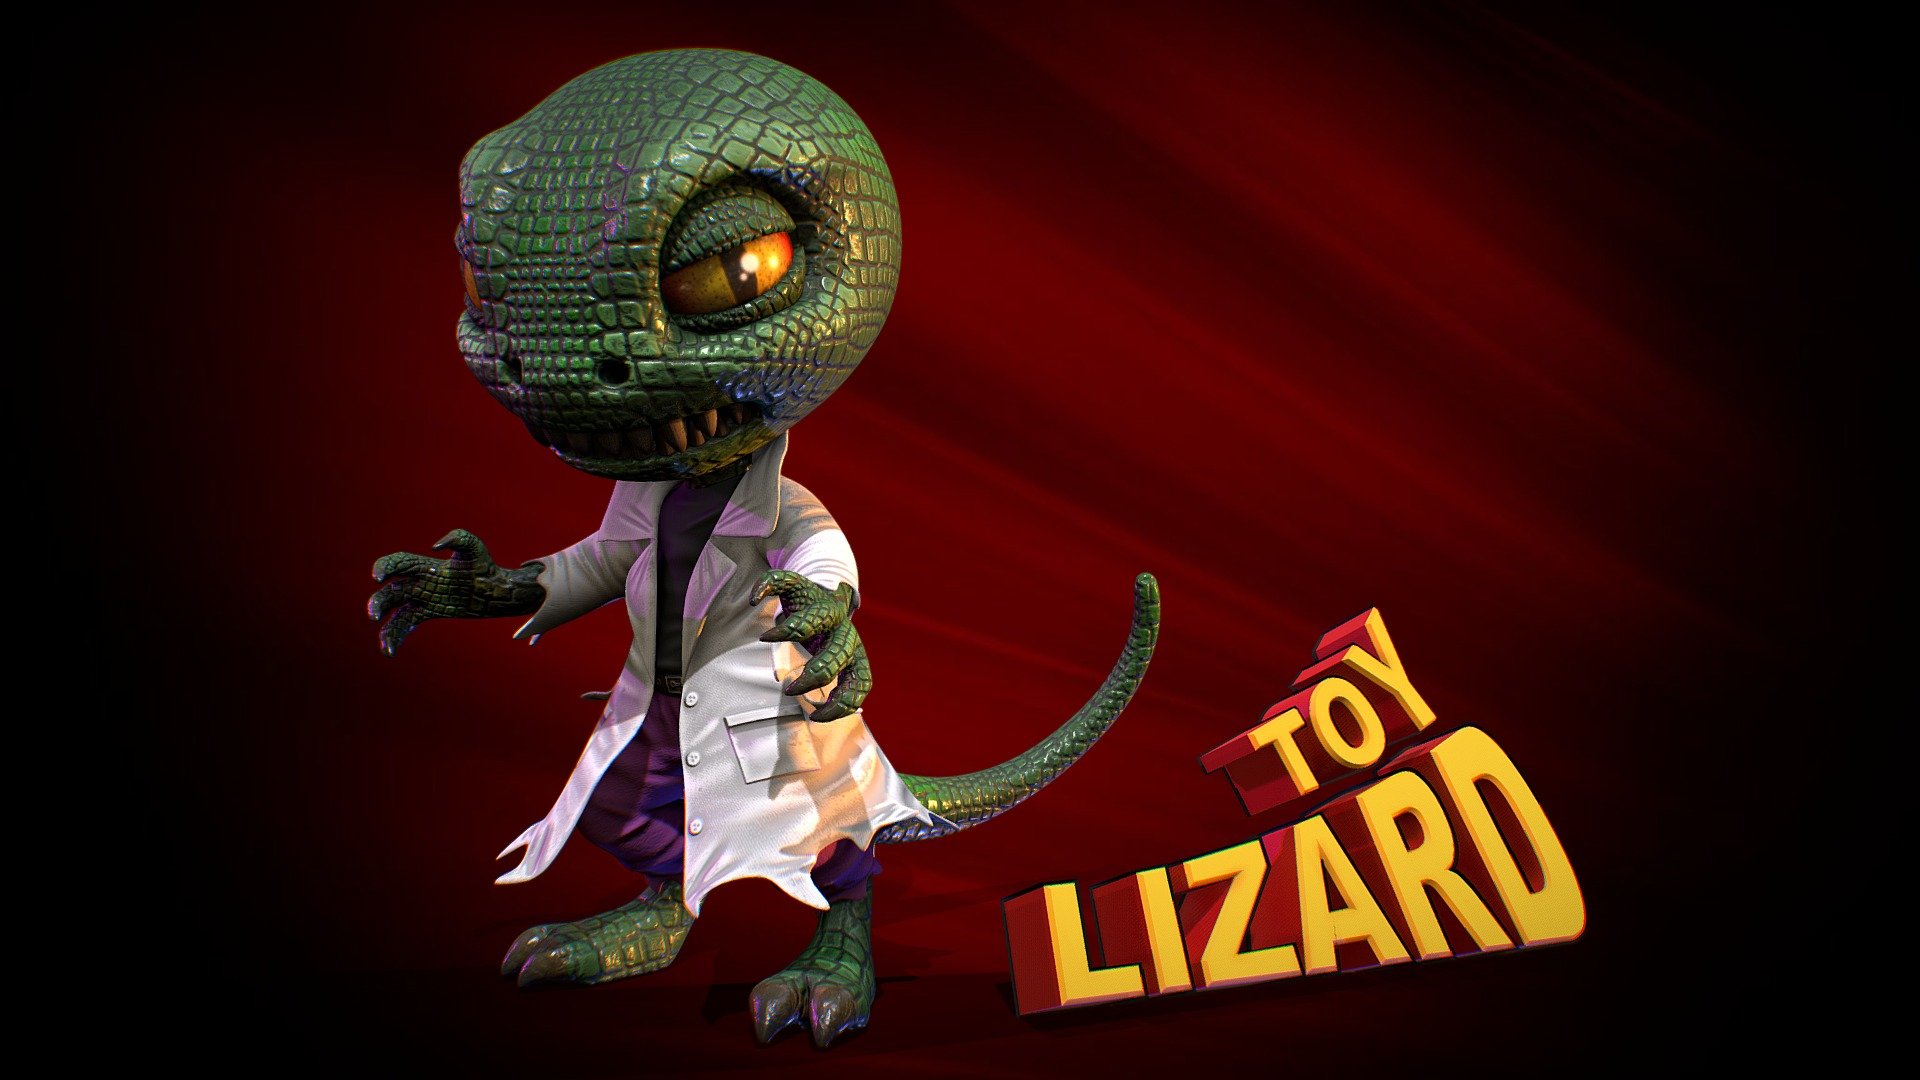 &ldquo;The Lizard